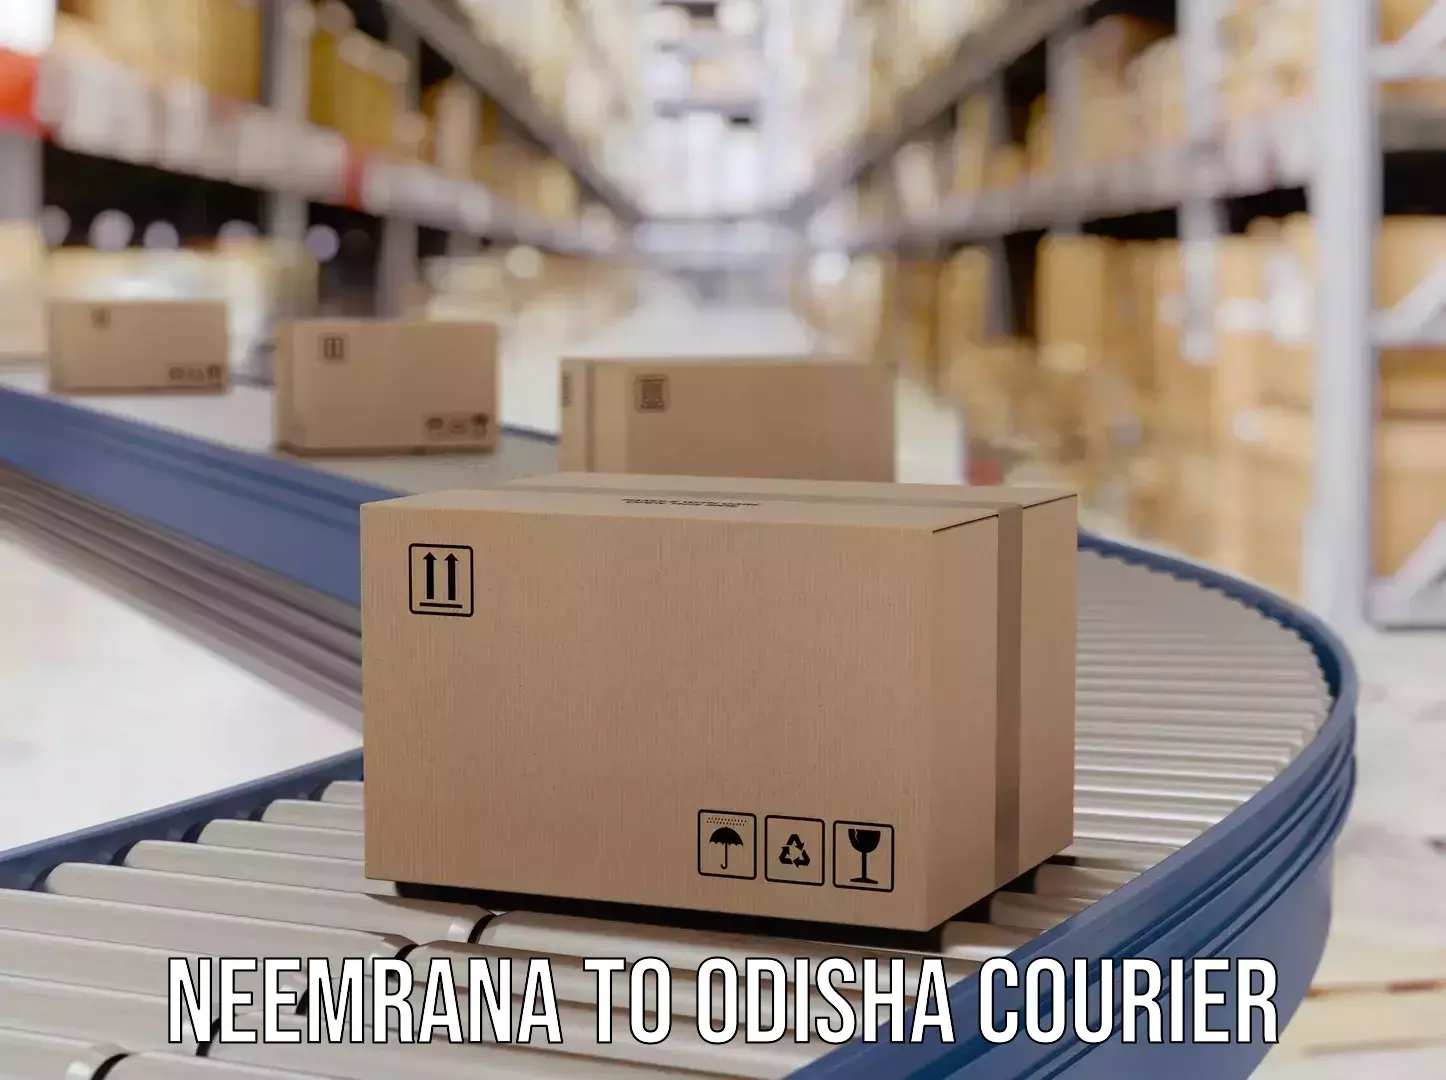 Courier service comparison Neemrana to Kantamal